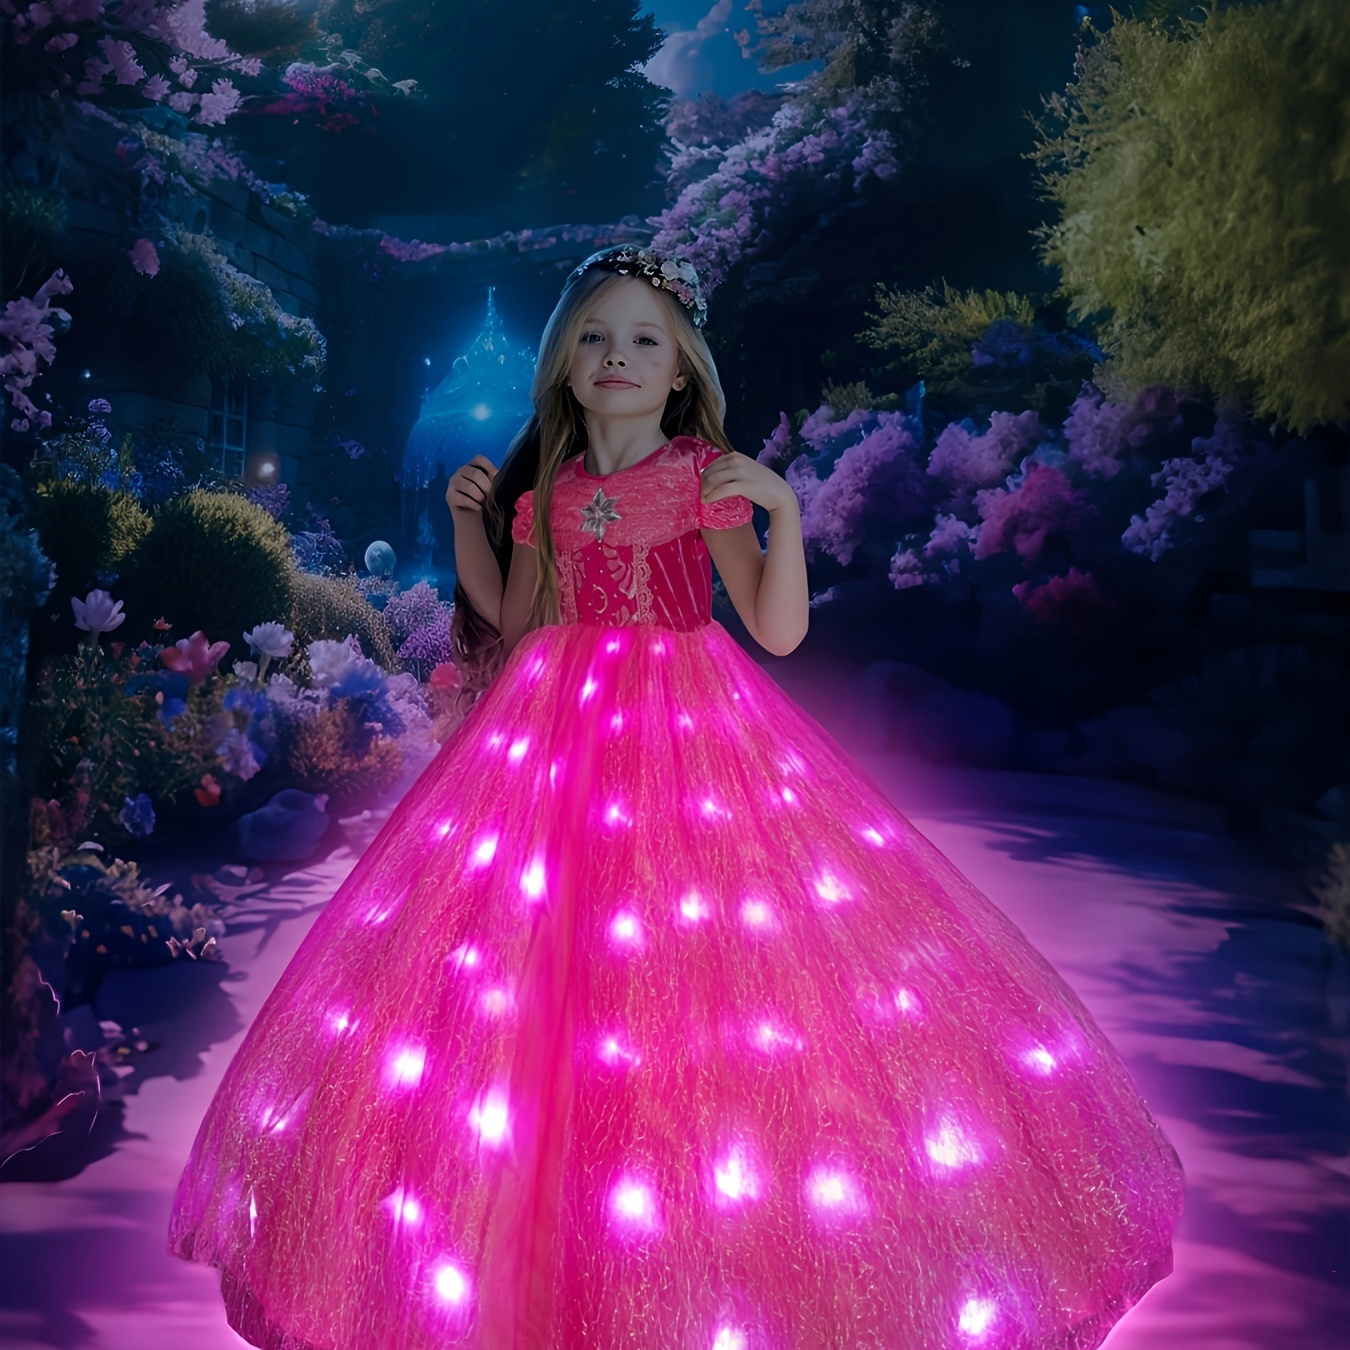 UPORPOR Robe Enfant Lumineuse Princesse Deguisement reine Fille